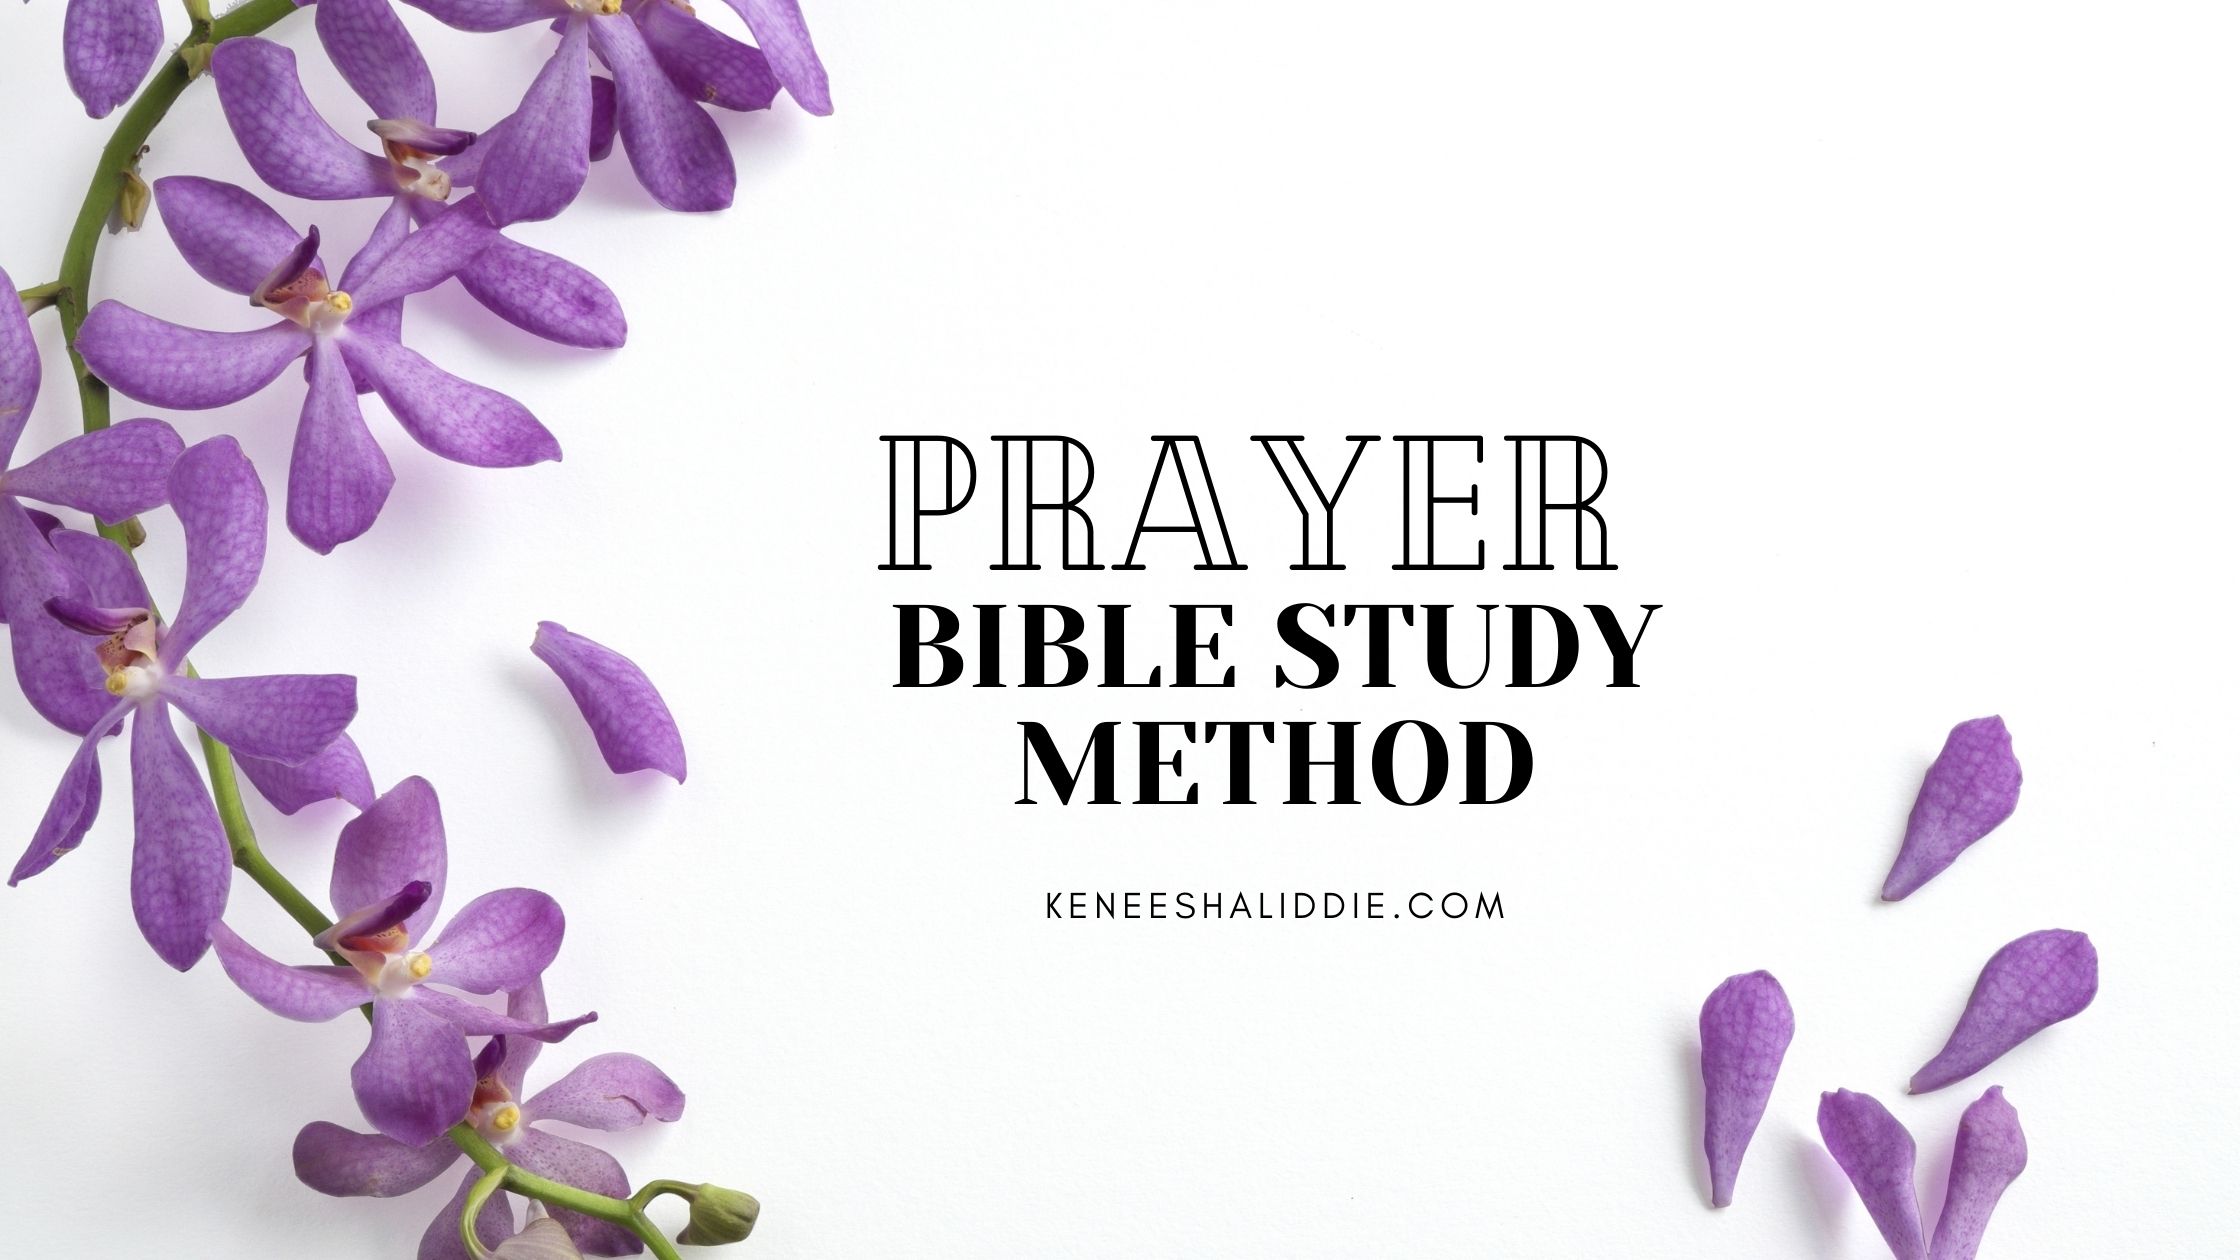 bible study on prayer for women